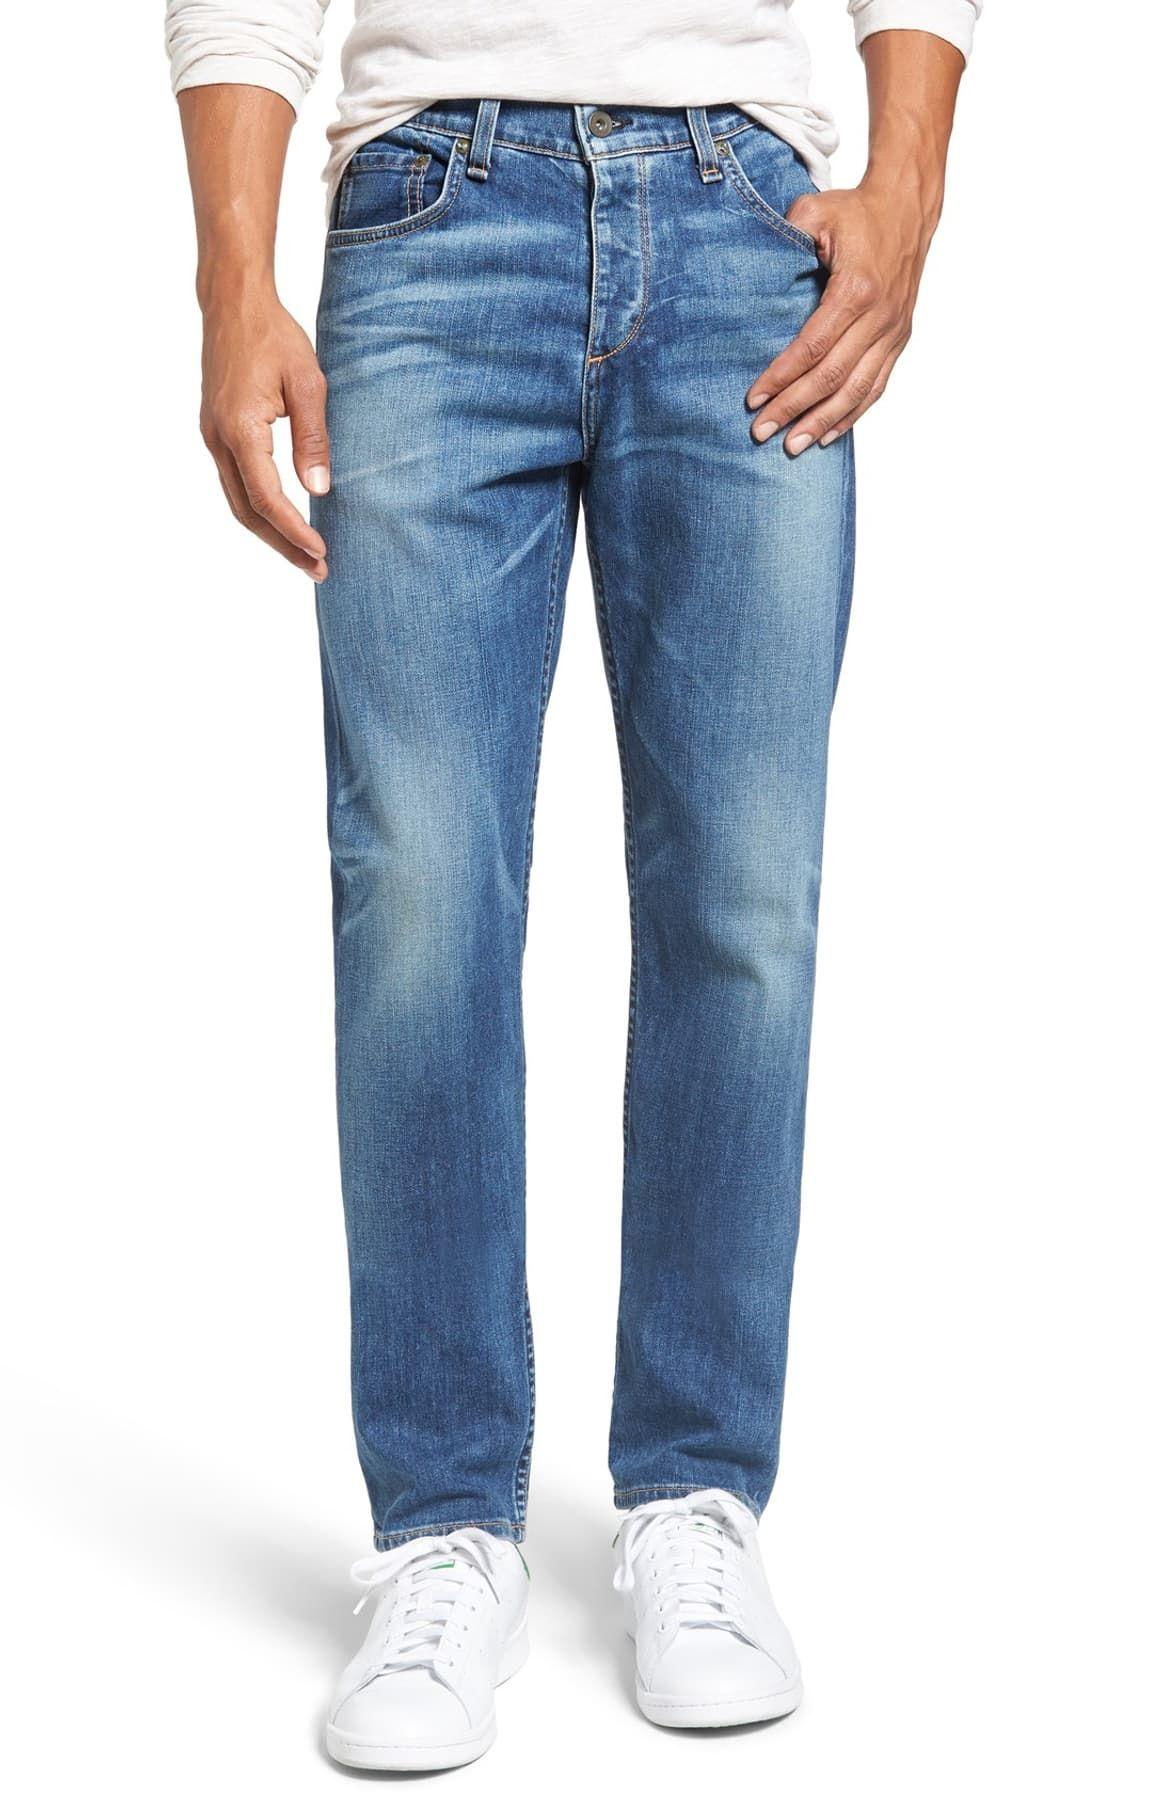 Details about   RAG & BONE Fit 3 Standard Issue Slim Straight Japanese Stretch Denim Jeans NWT 